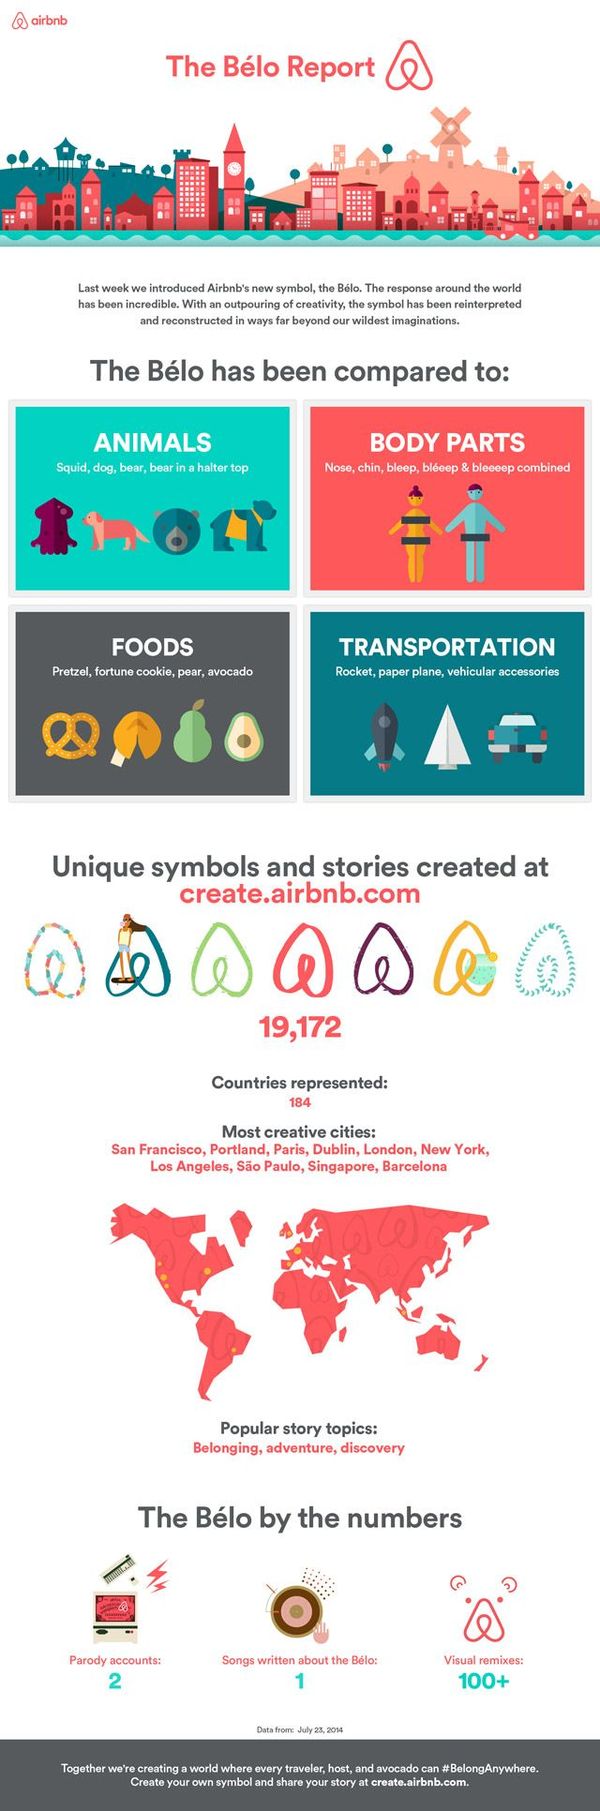 airbnb-logo-reponse